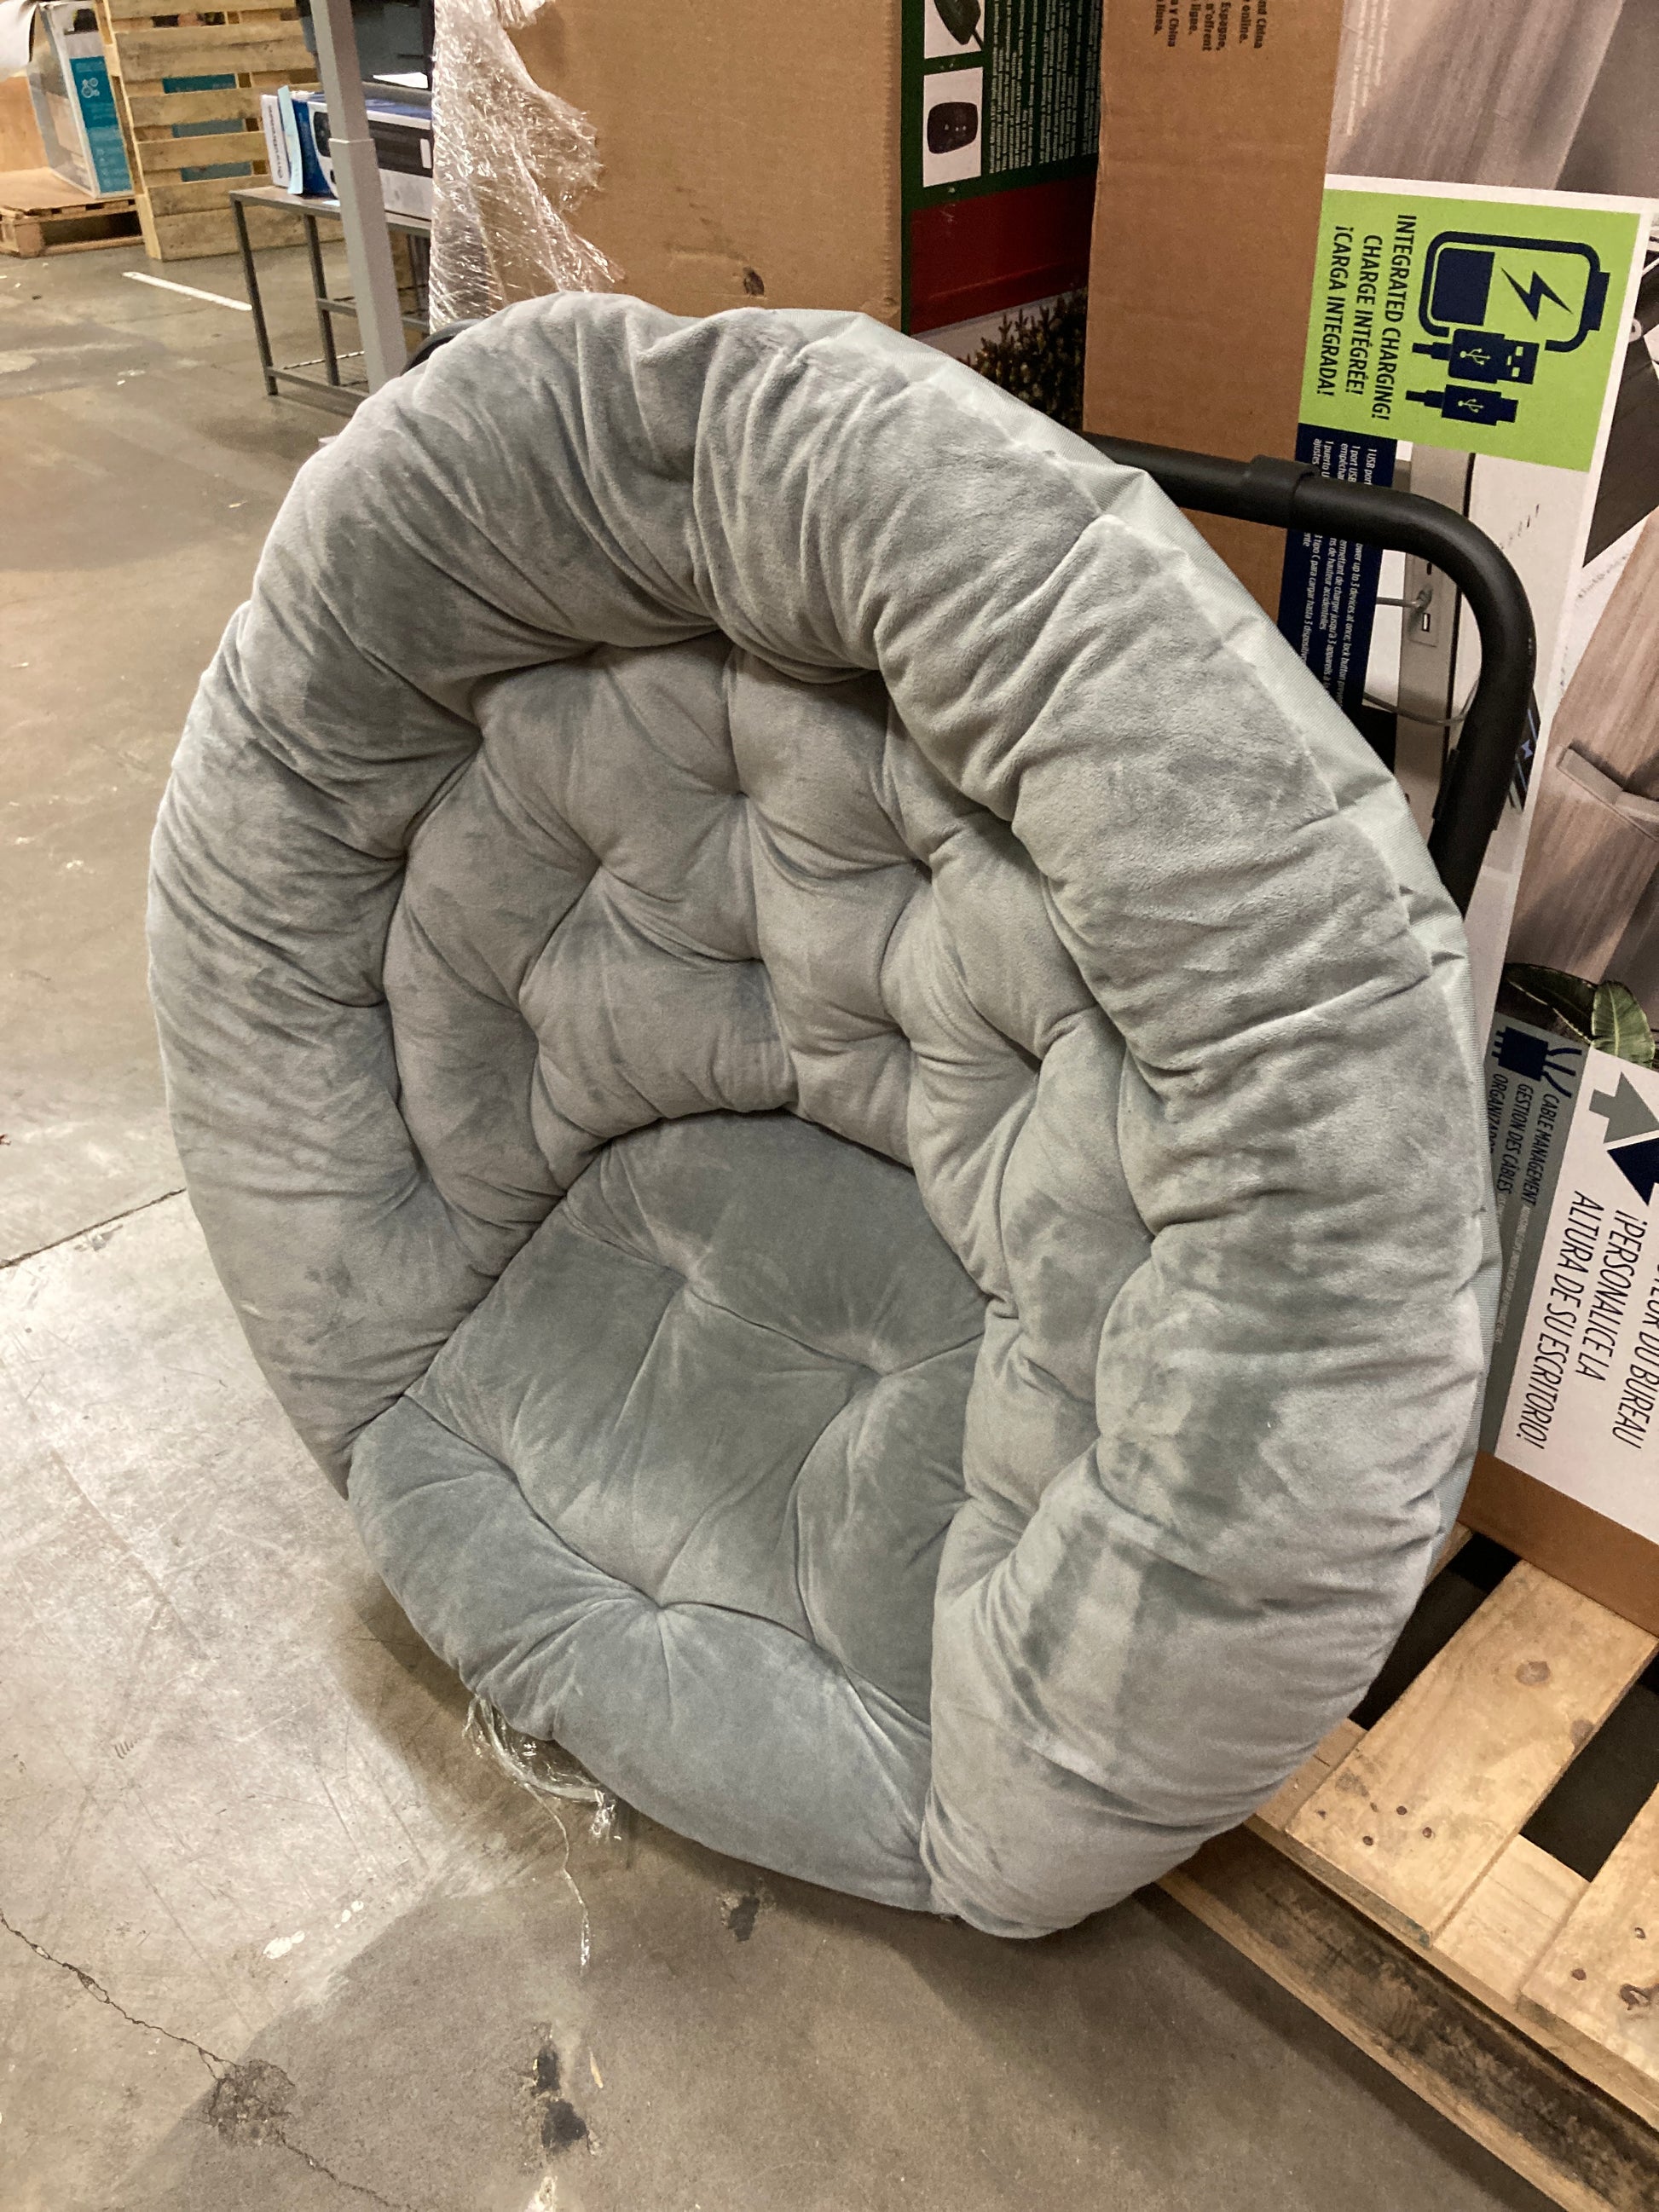 Costco - Idea Nuova Oversized Saucer Chair - Retail $39 Default Title